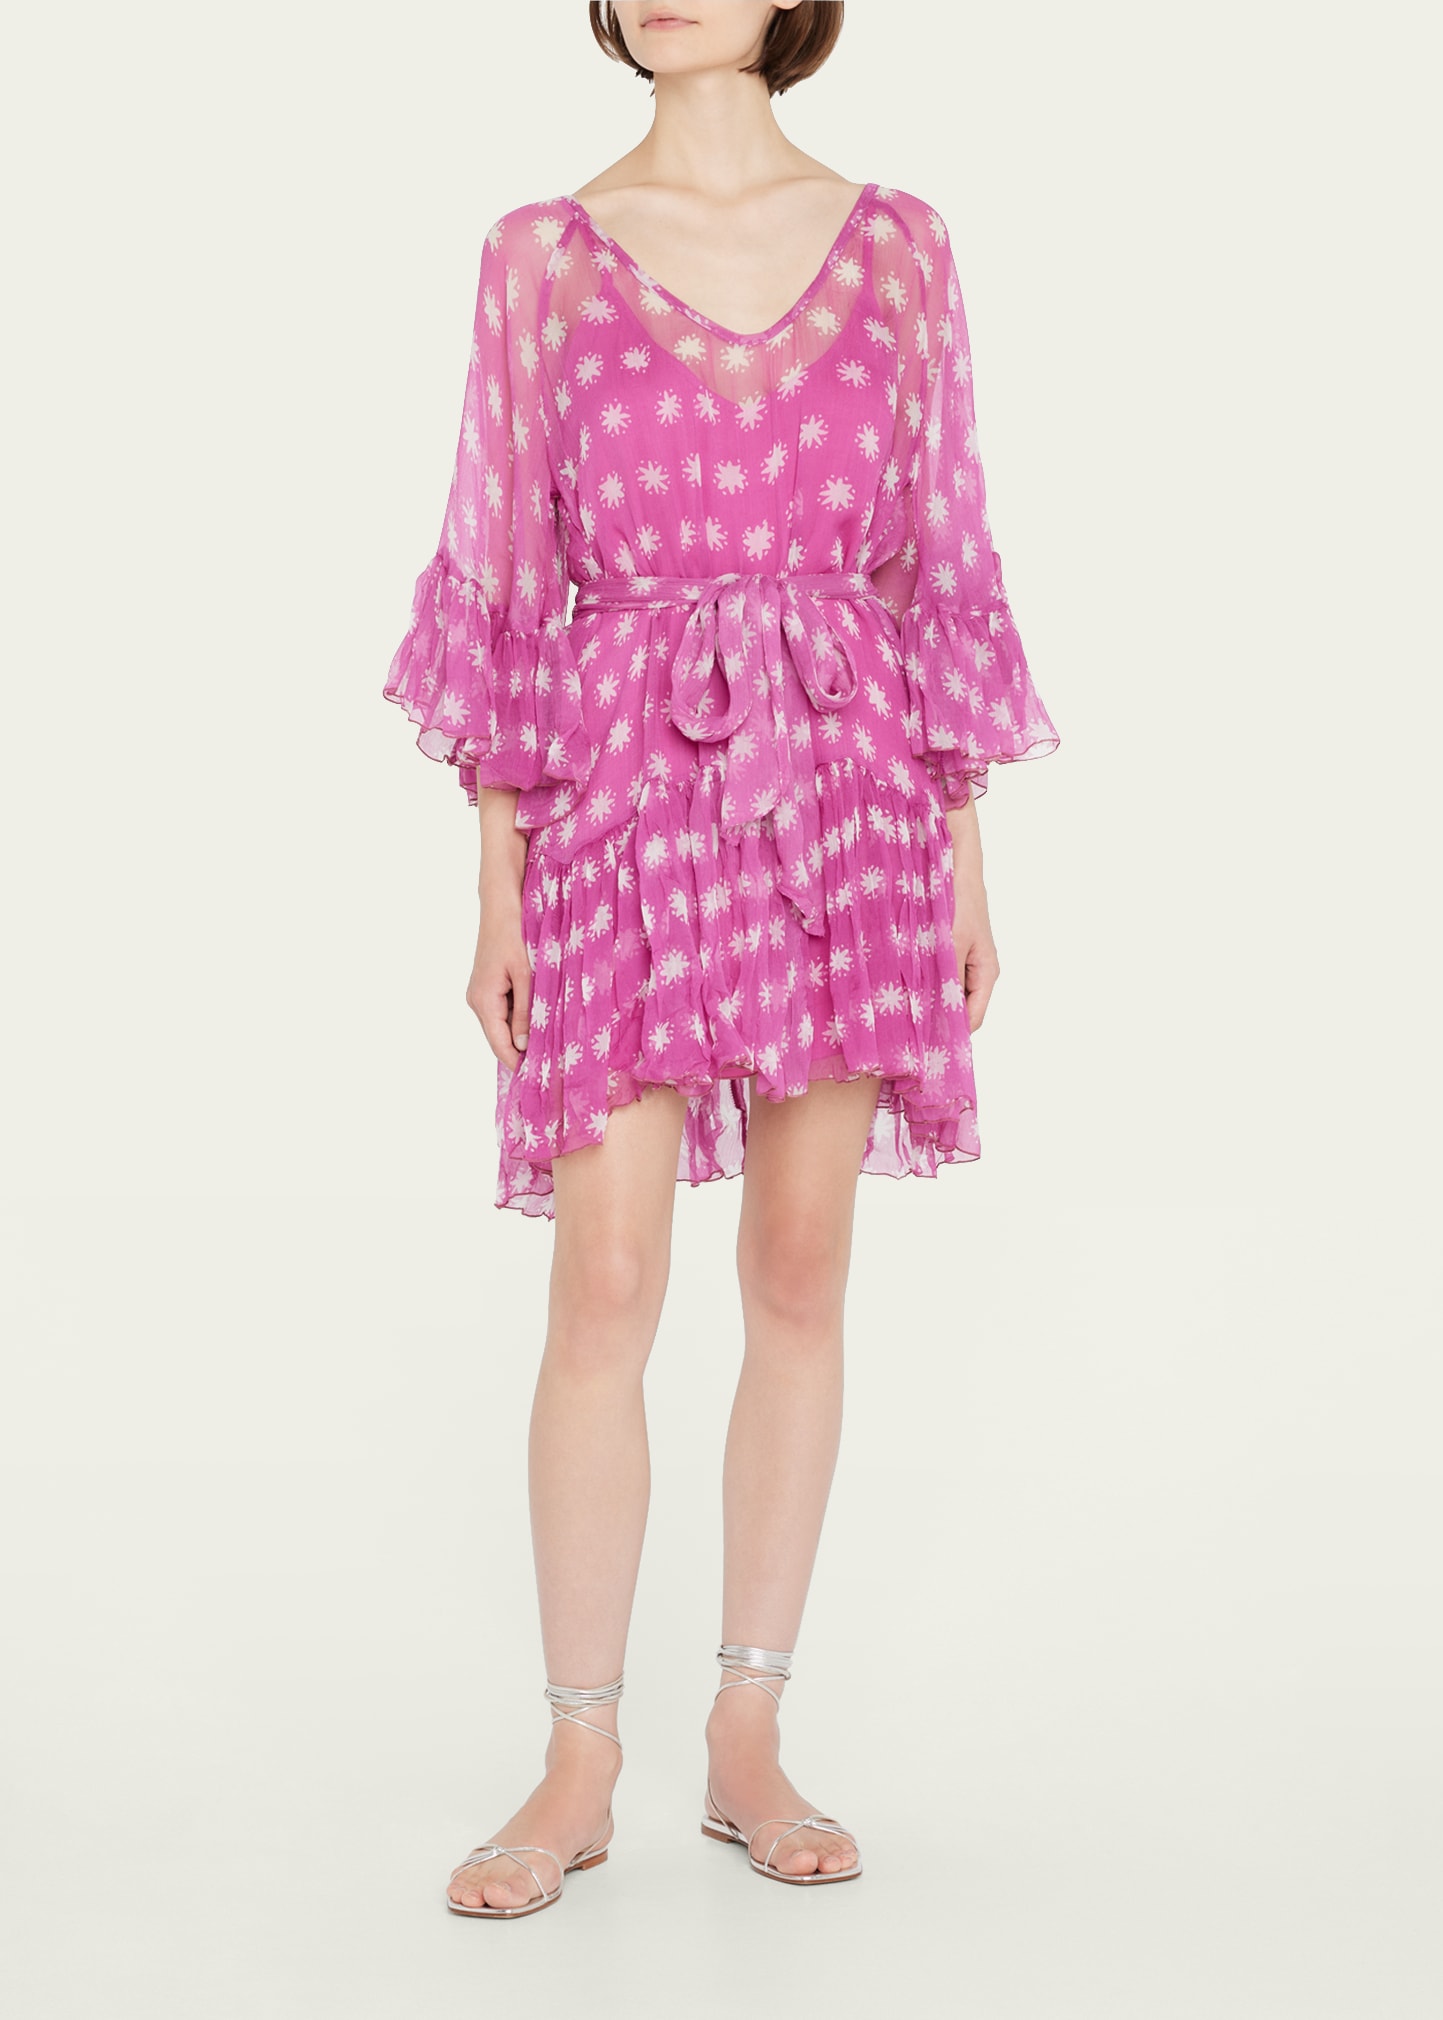 Cloe Cassandro Spanish Frilled Sheer Mini Dress